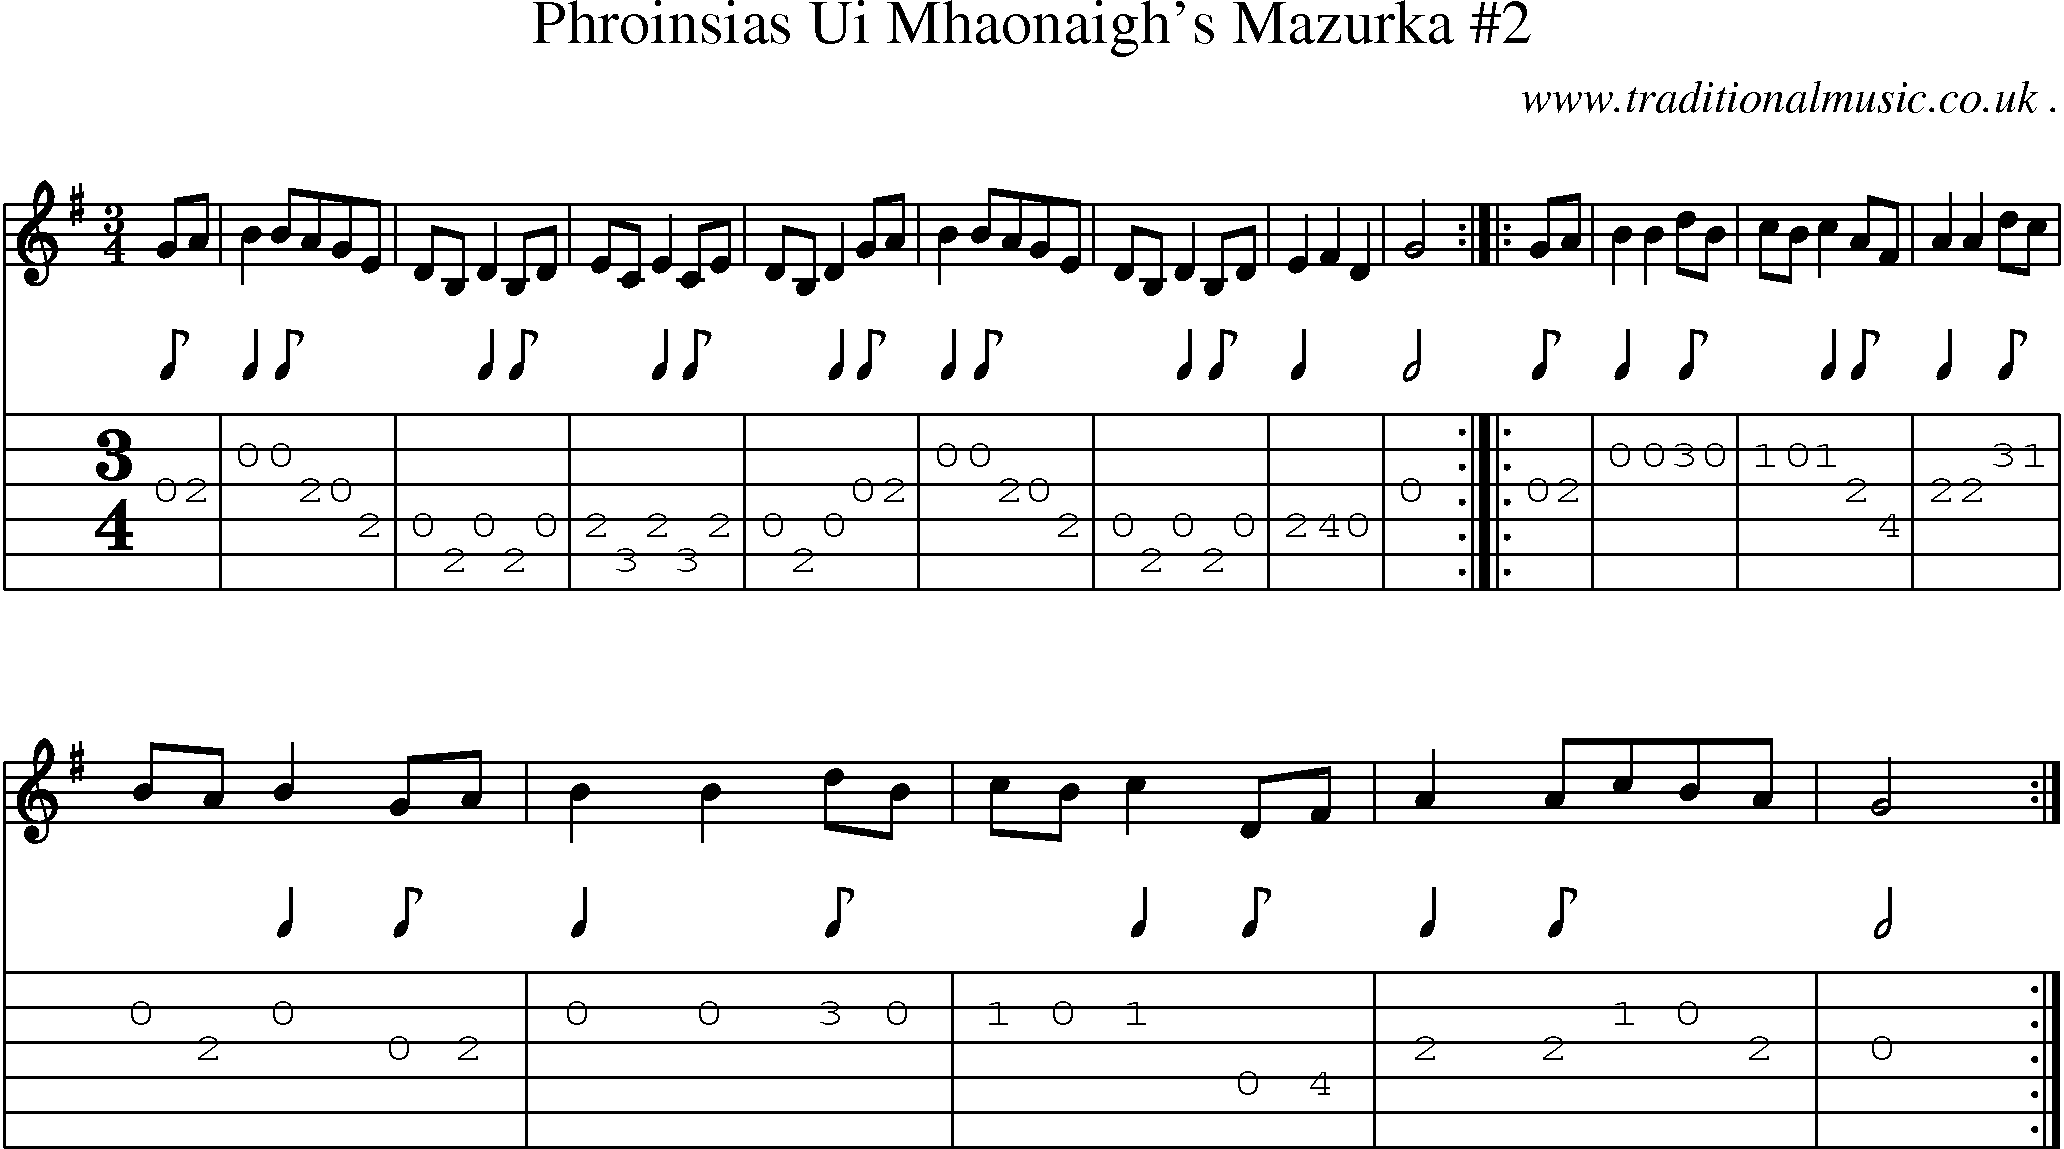 Sheet-Music and Guitar Tabs for Phroinsias Ui Mhaonaighs Mazurka 2